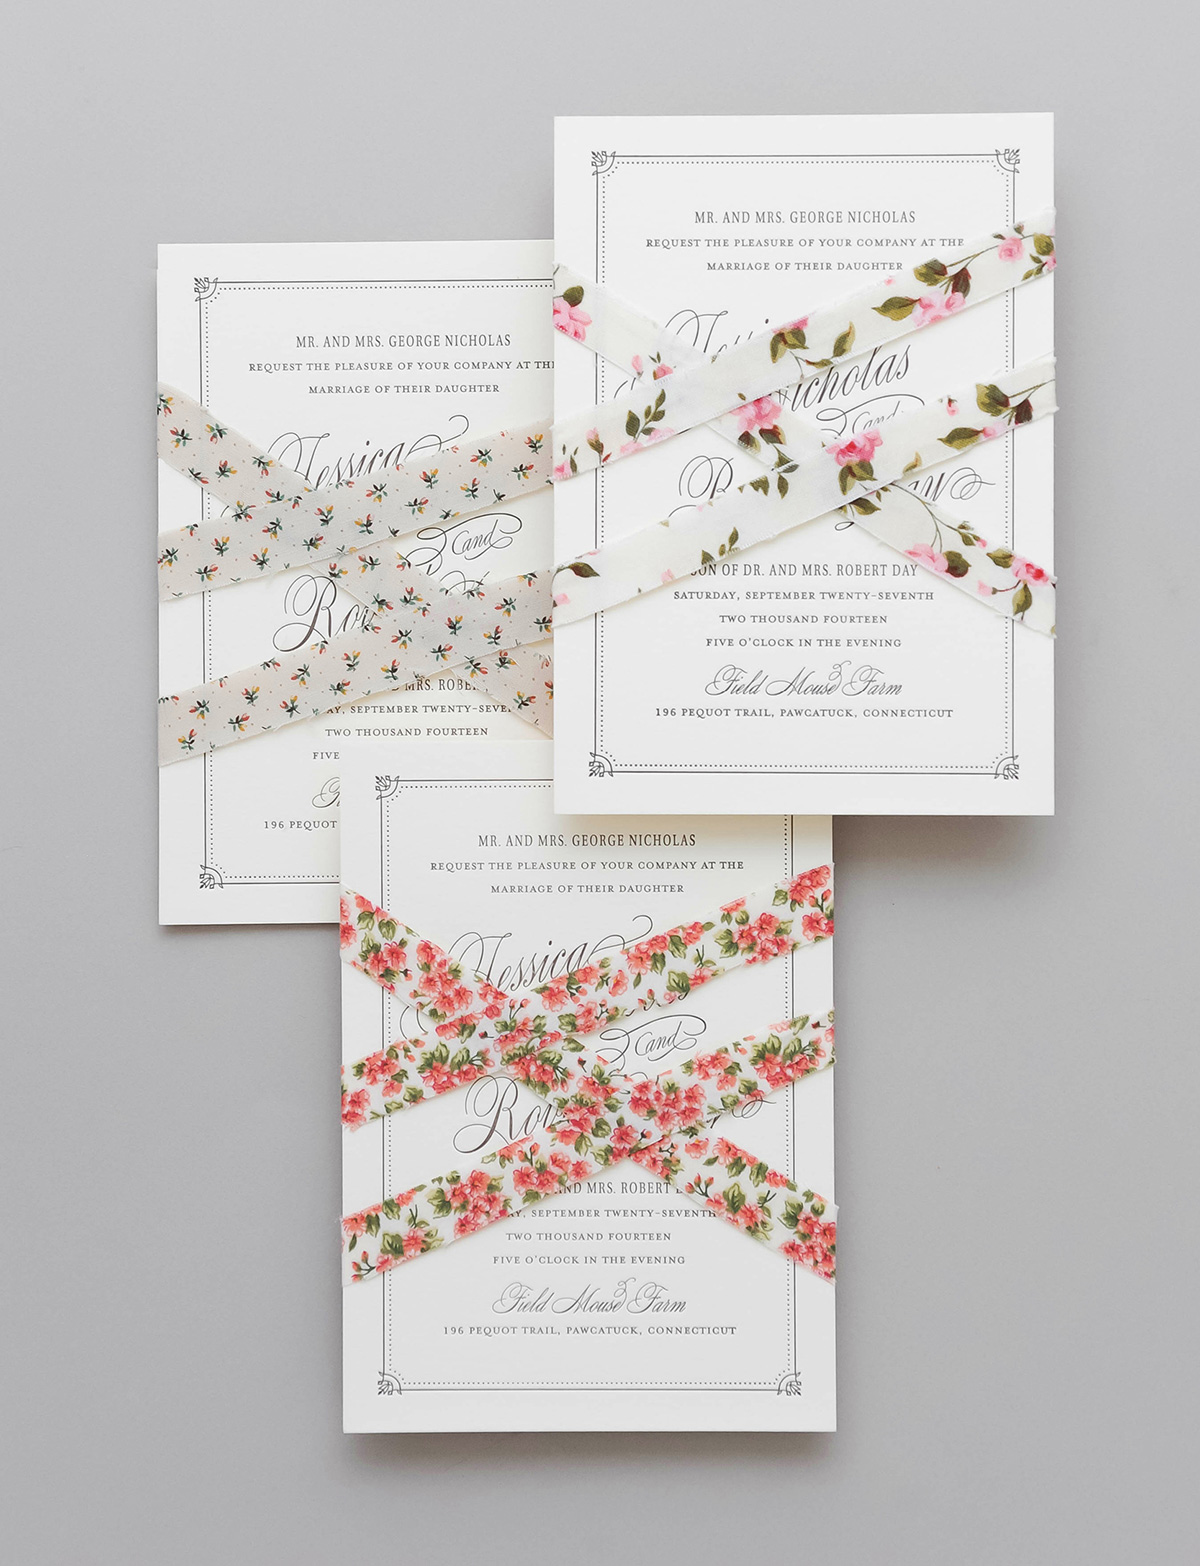 Classic letterpress invitations with calico fabric ribbon